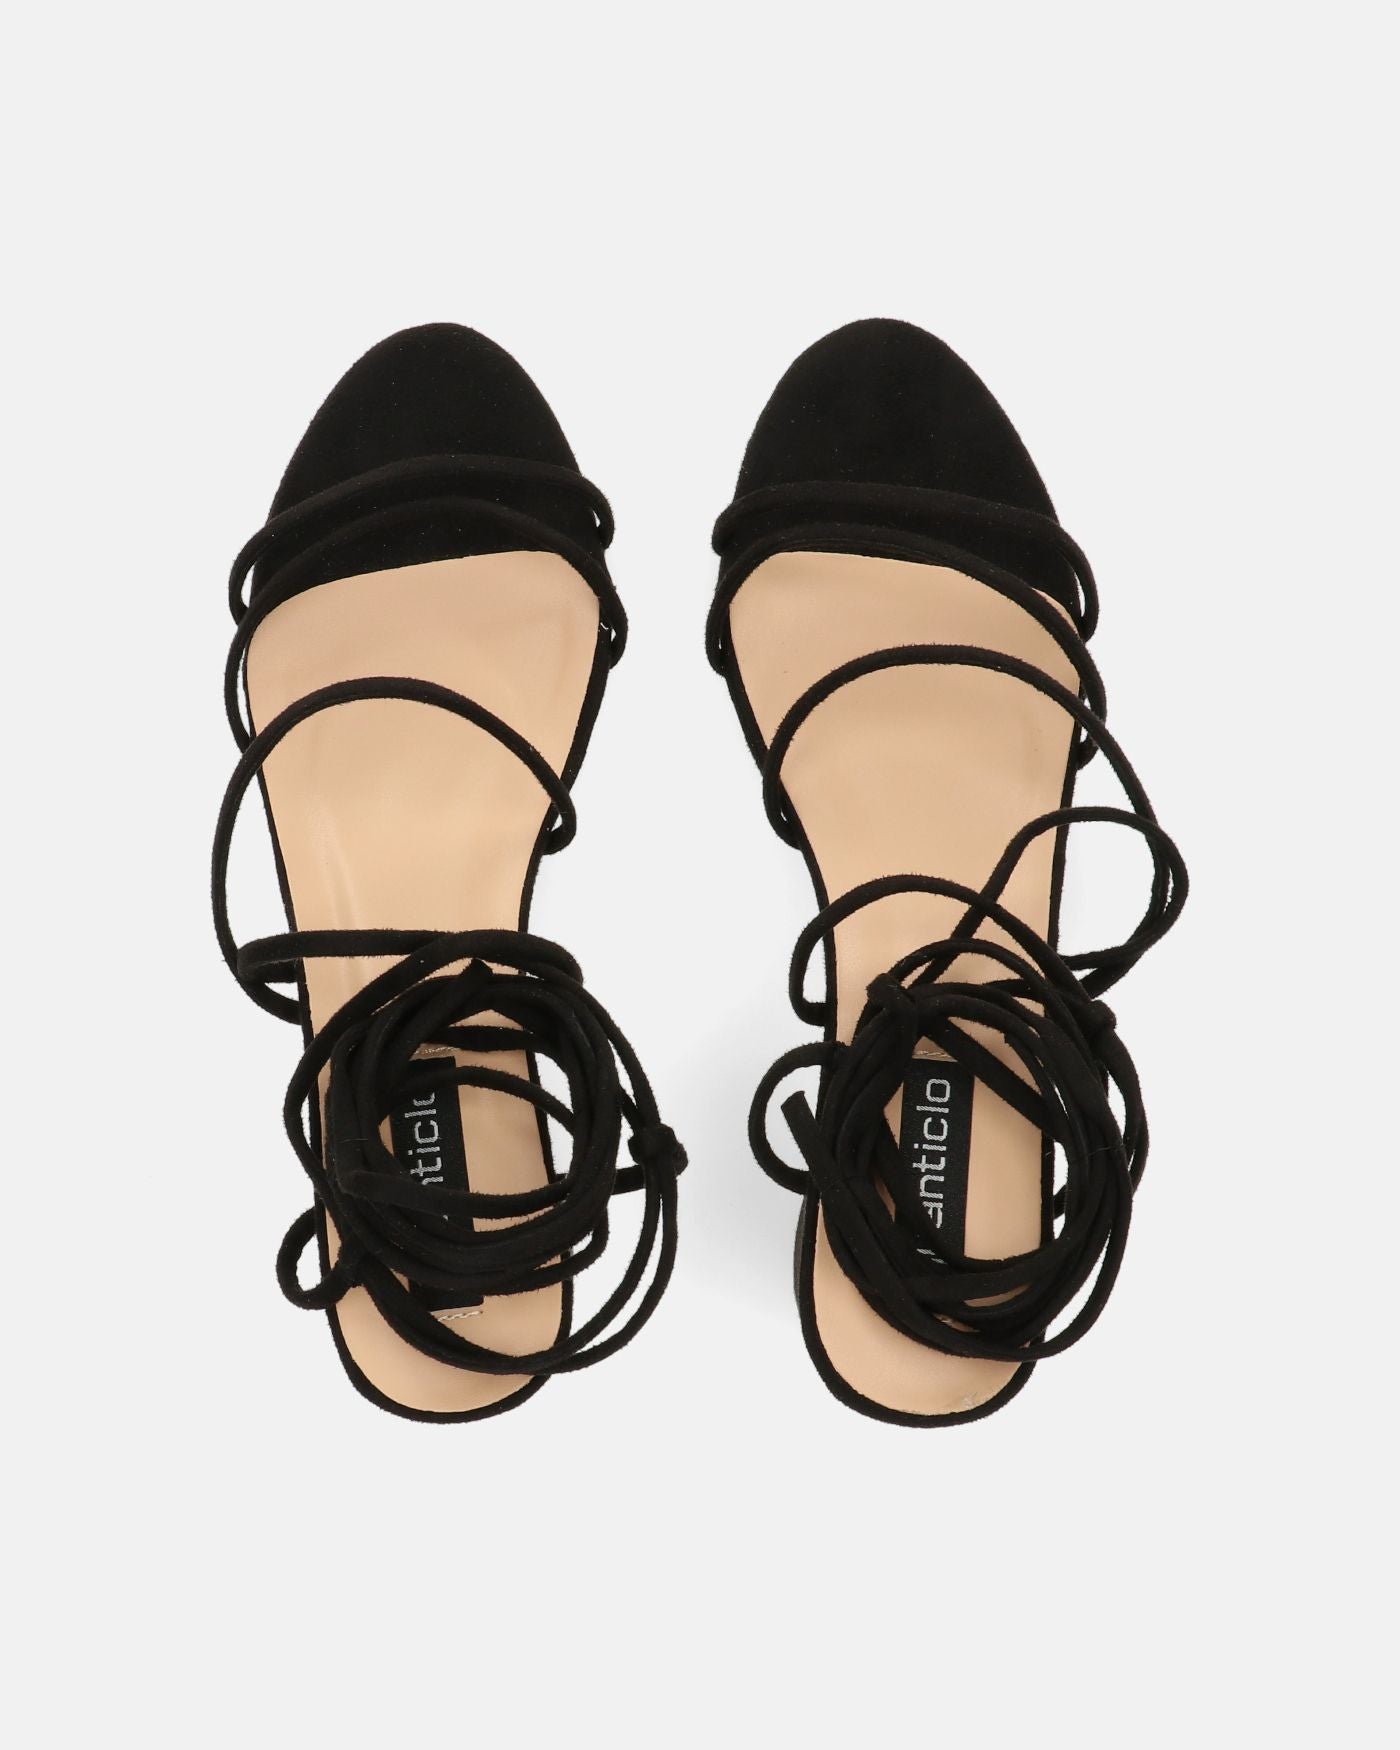 TALIA - heeled sandal in black